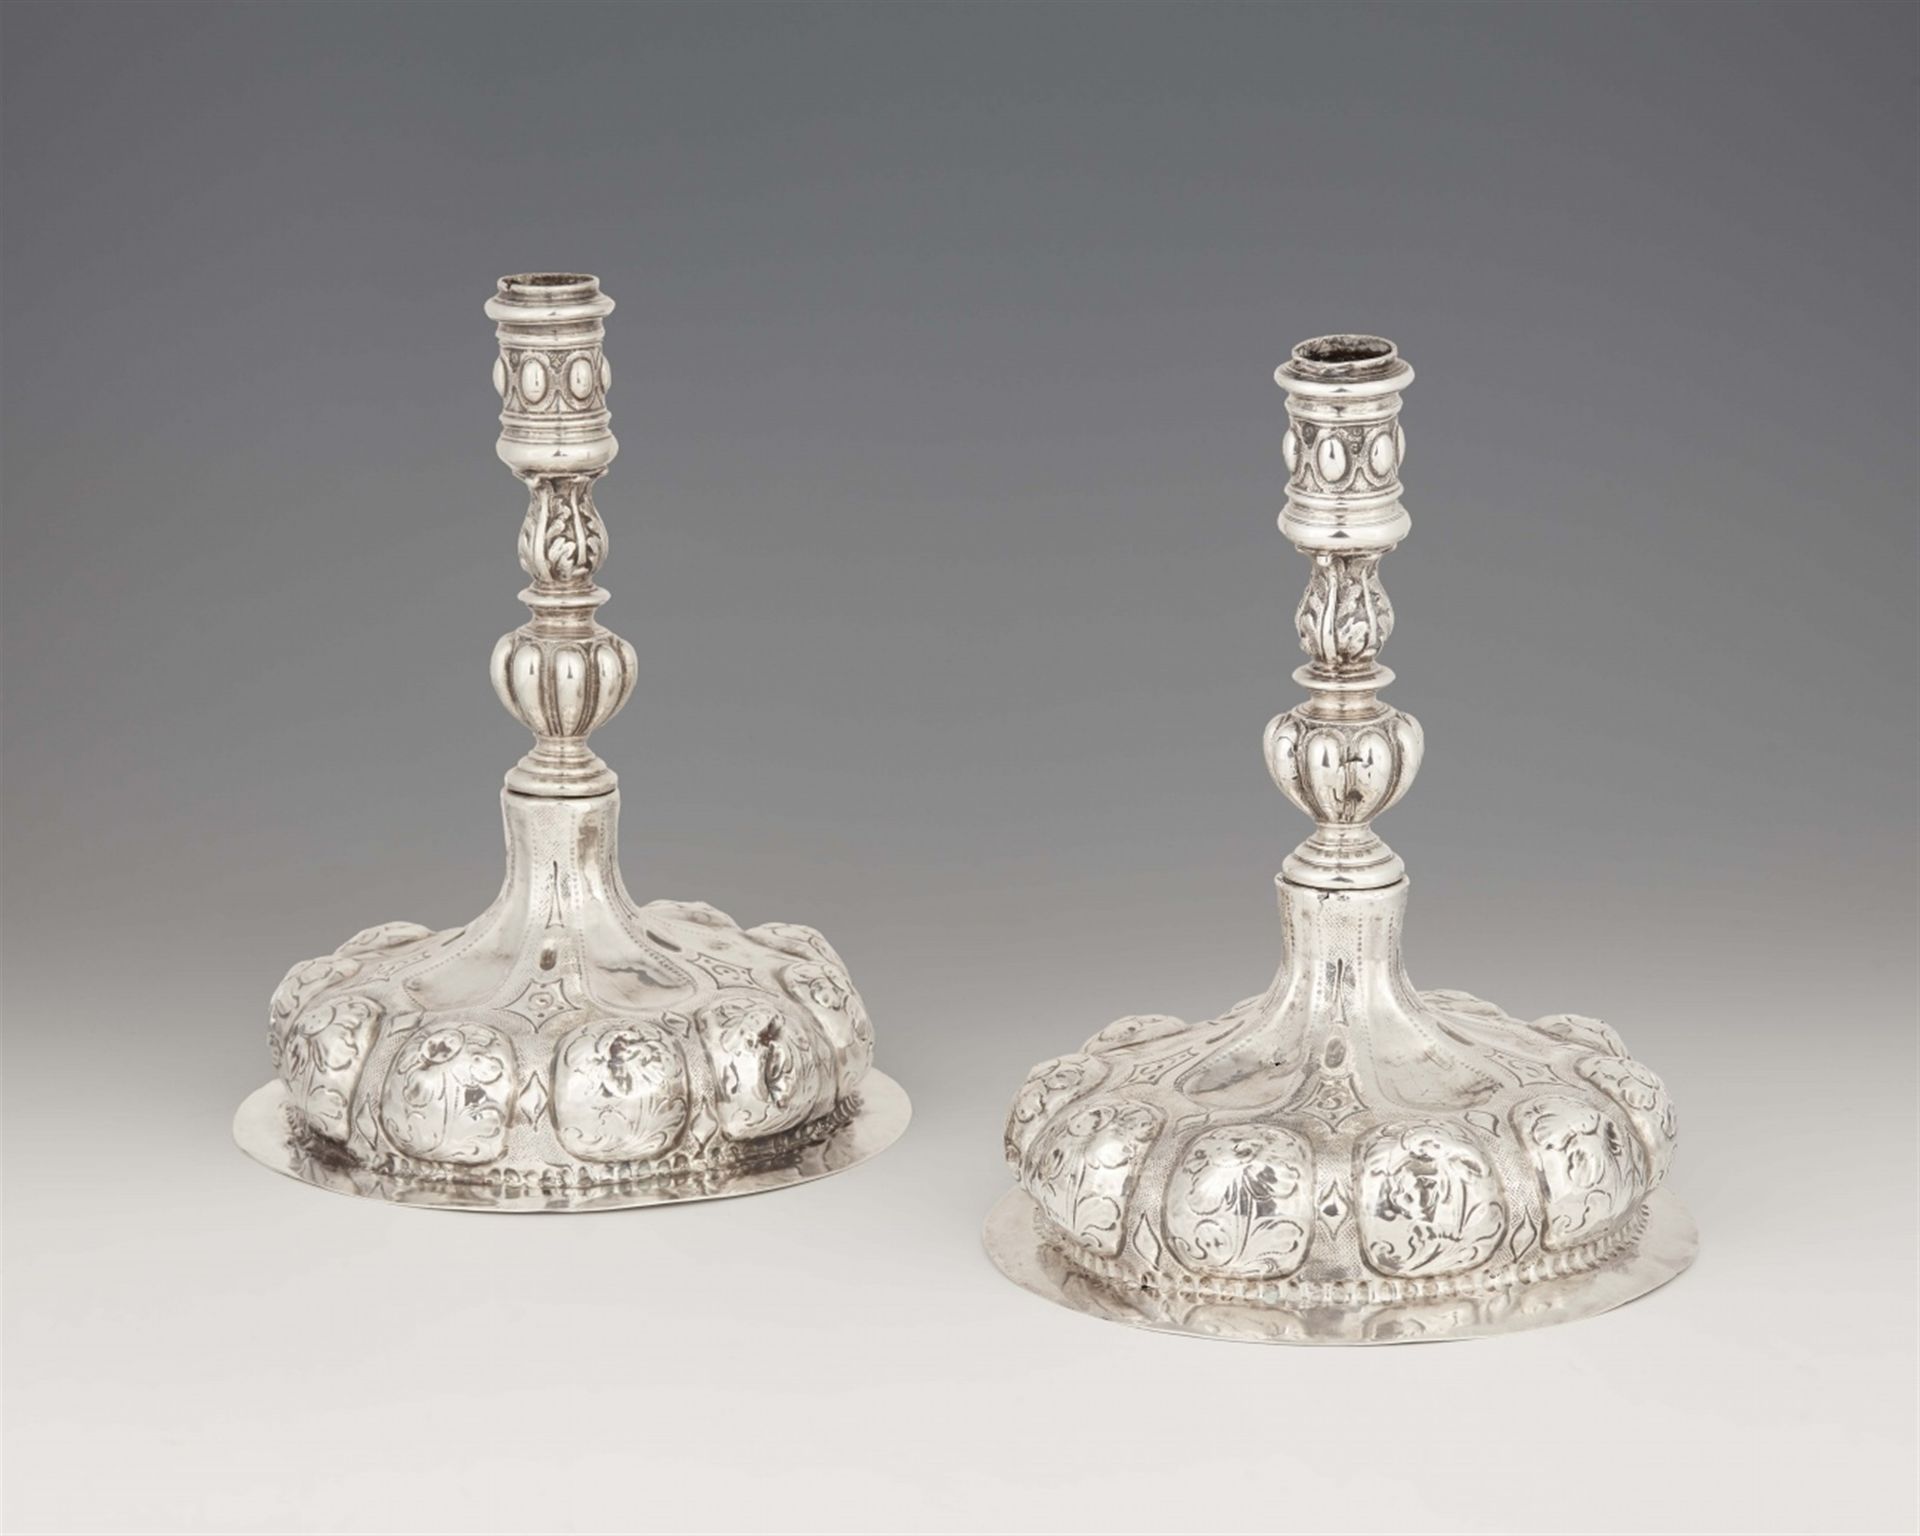 An early pair of Venetian silver candlesticks